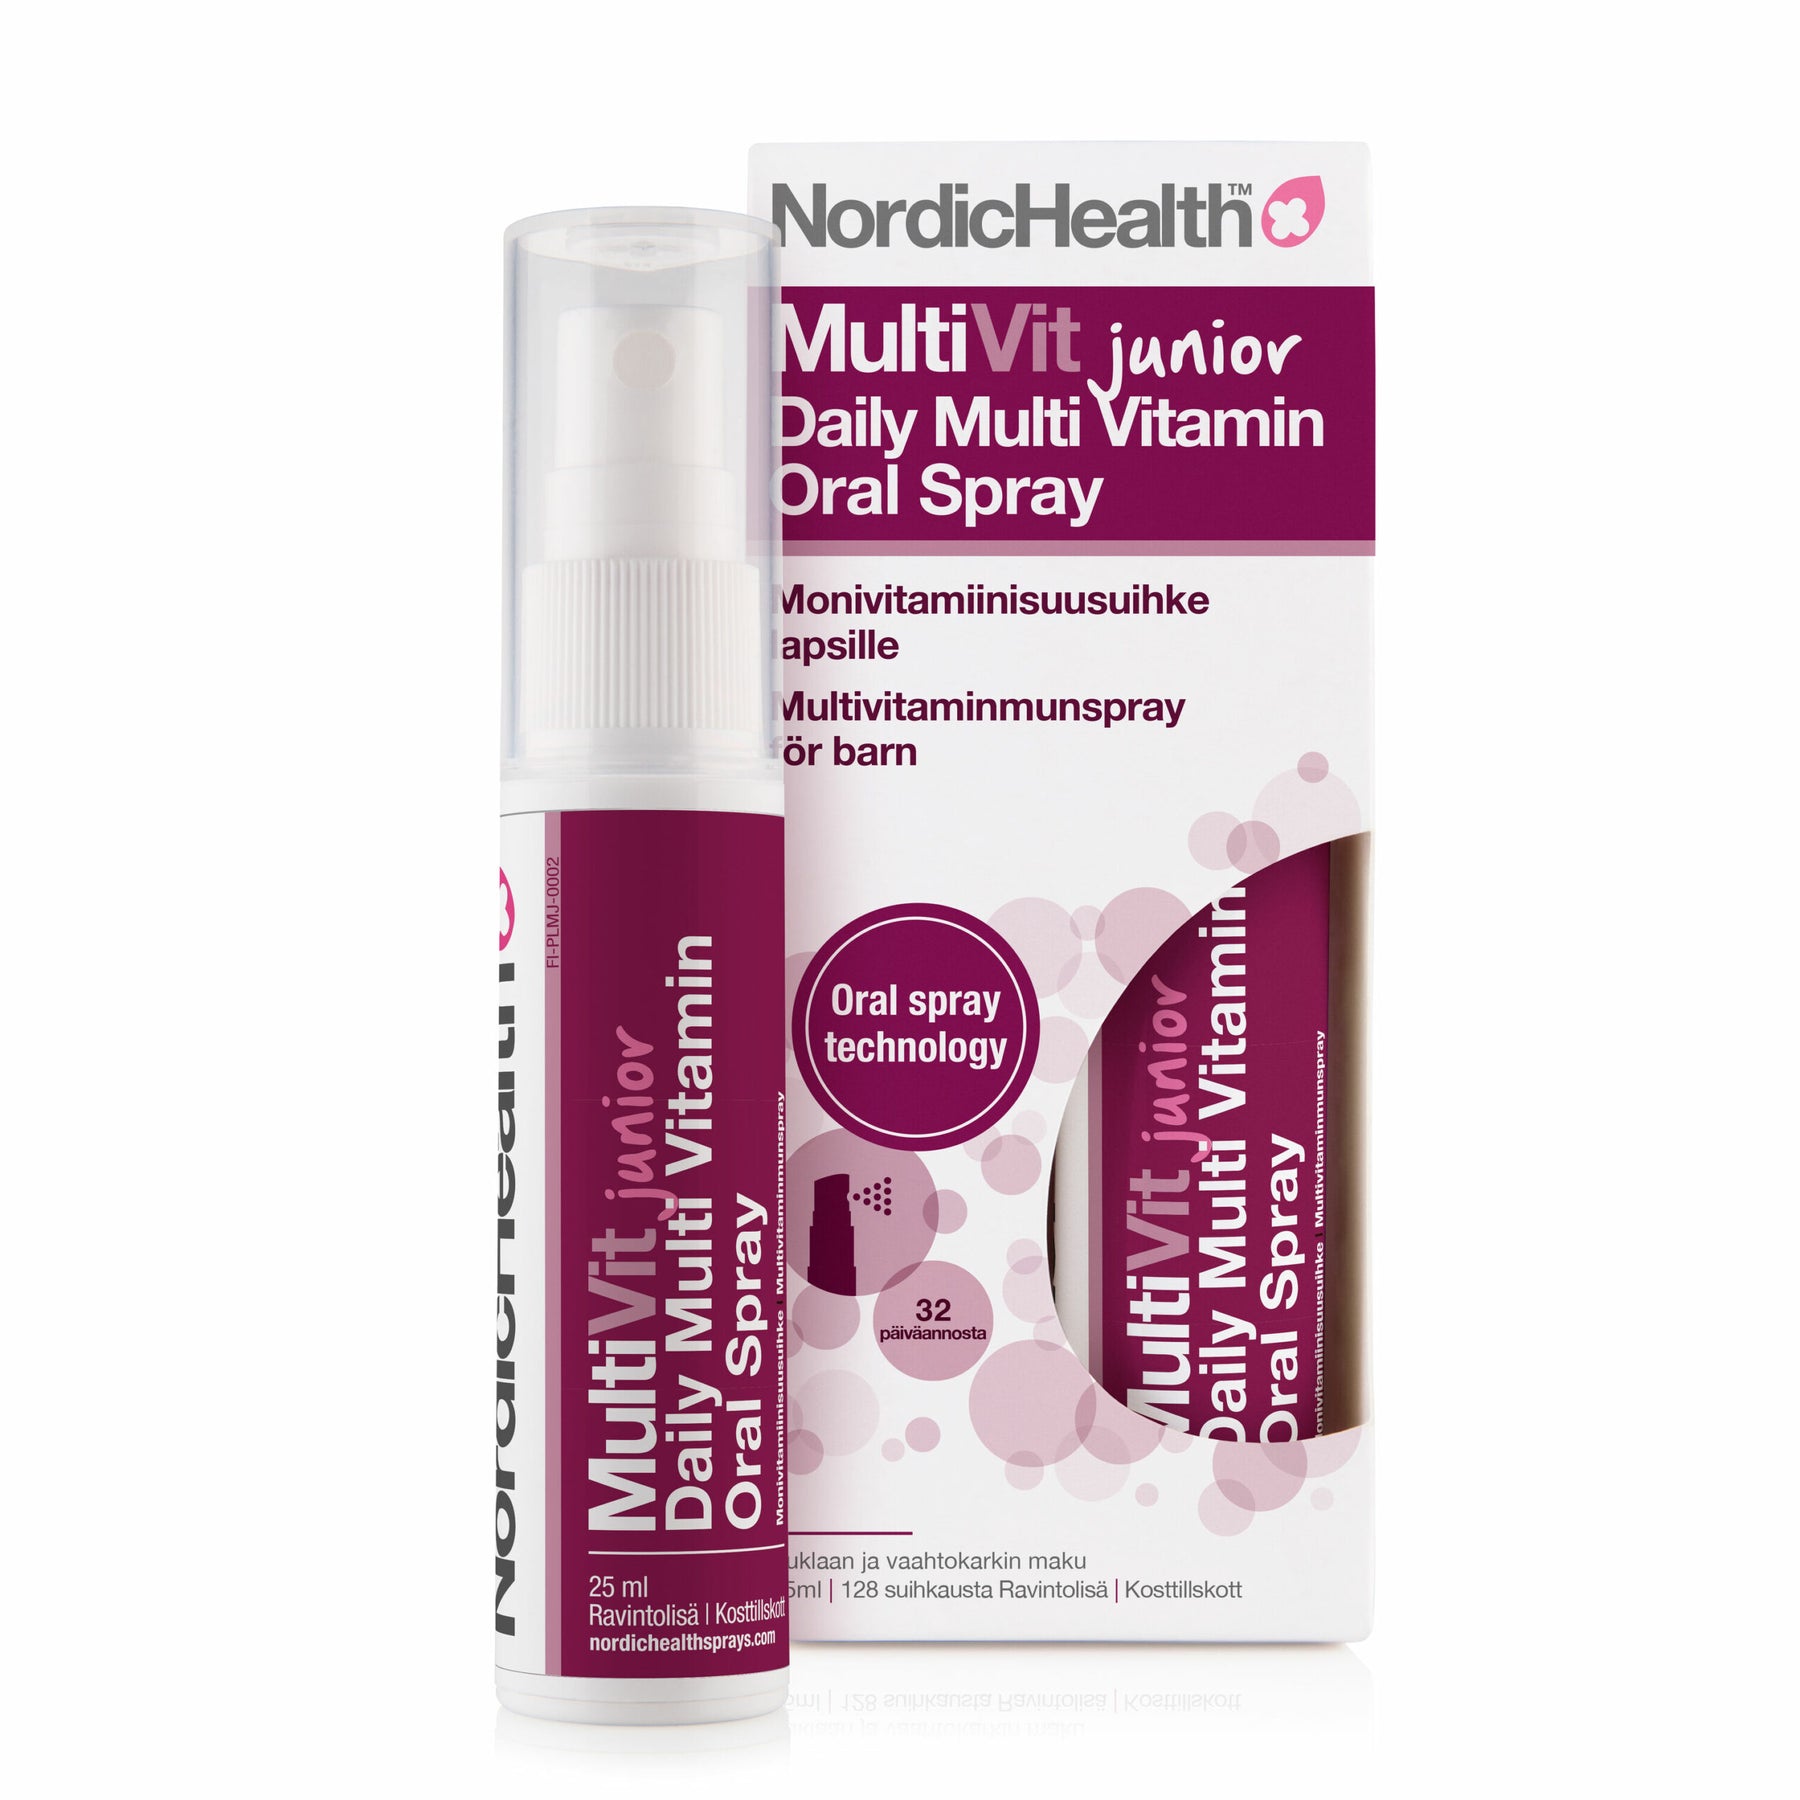 Nordic Health MultiVit Junior Daily Multi Vitamin Oral Spray - Monivitamiinisuusuihke lapsille 25 ml